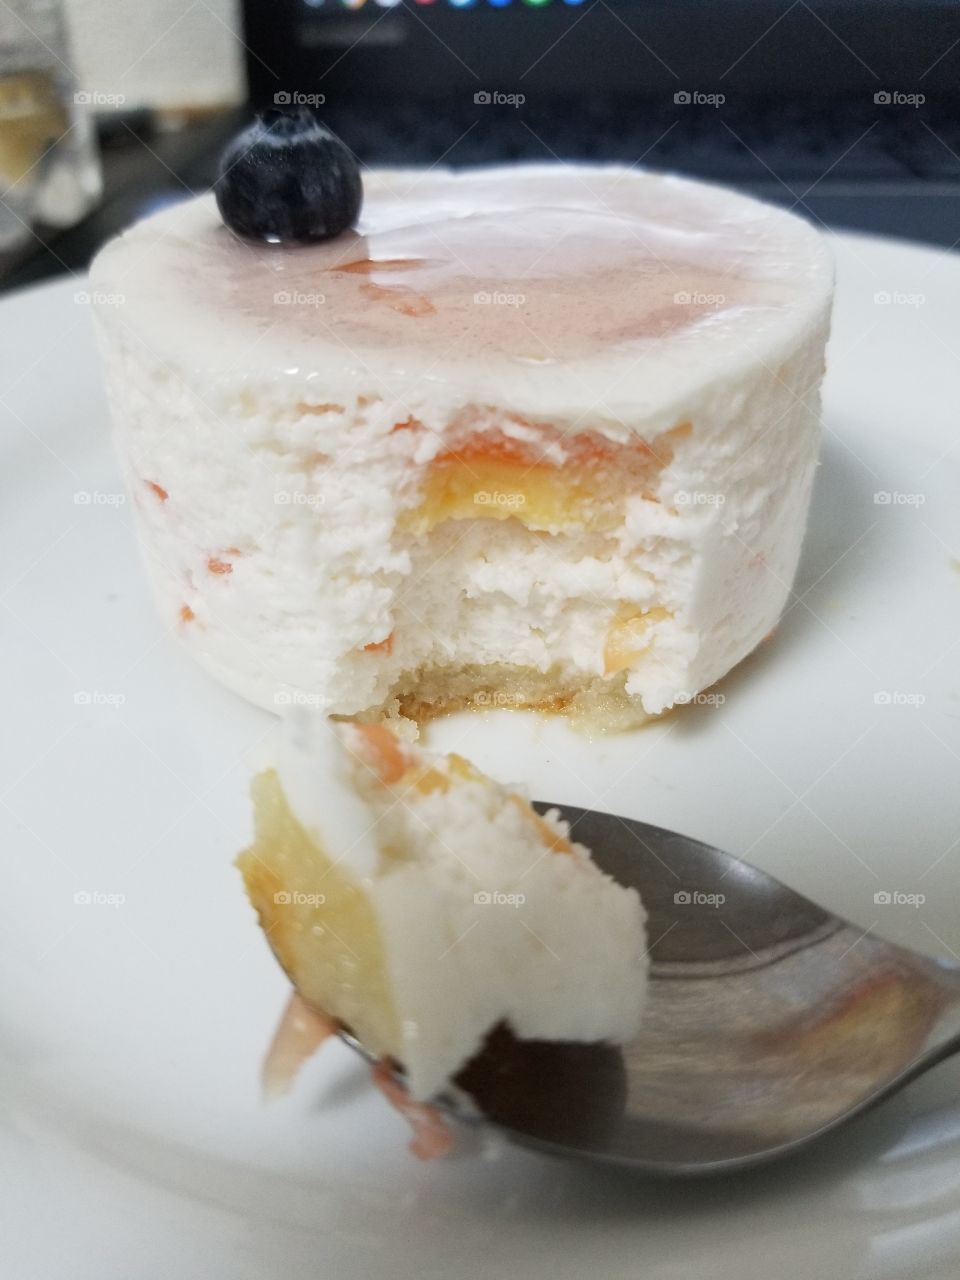 Penguin Pastry grapefruit mousse cake